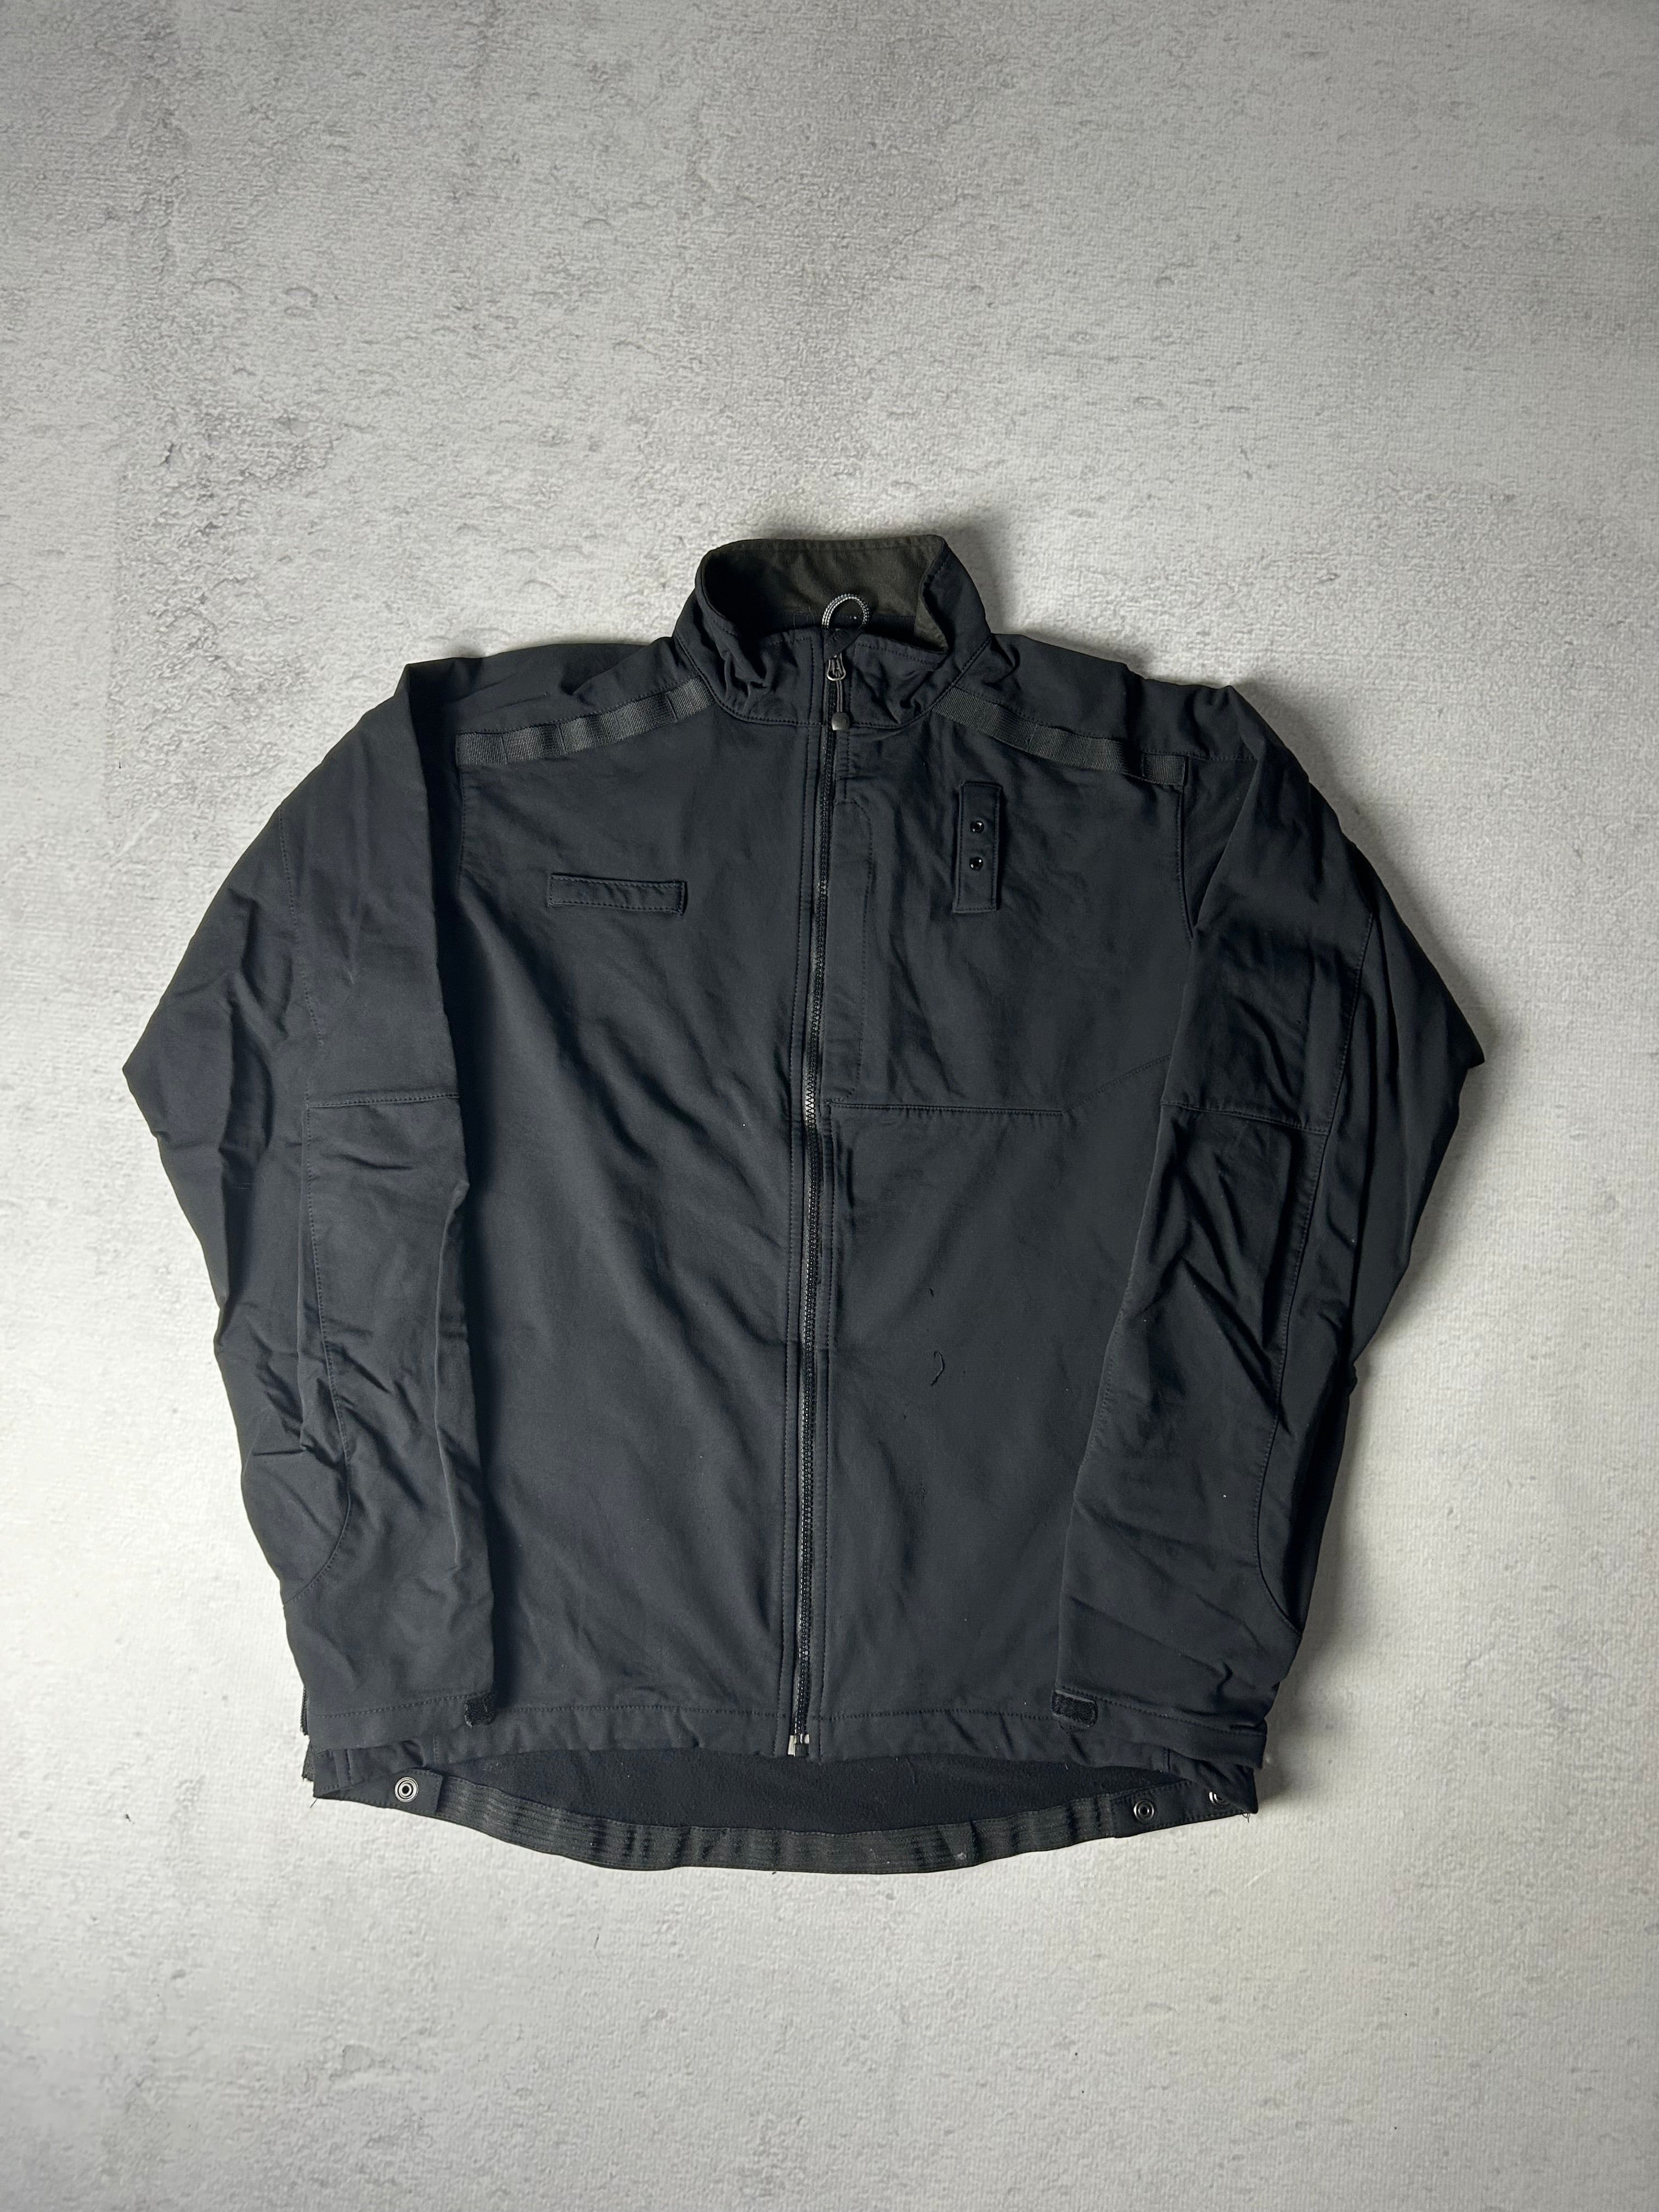 Vintage The North Face Lightweight Jacket - Men's XL